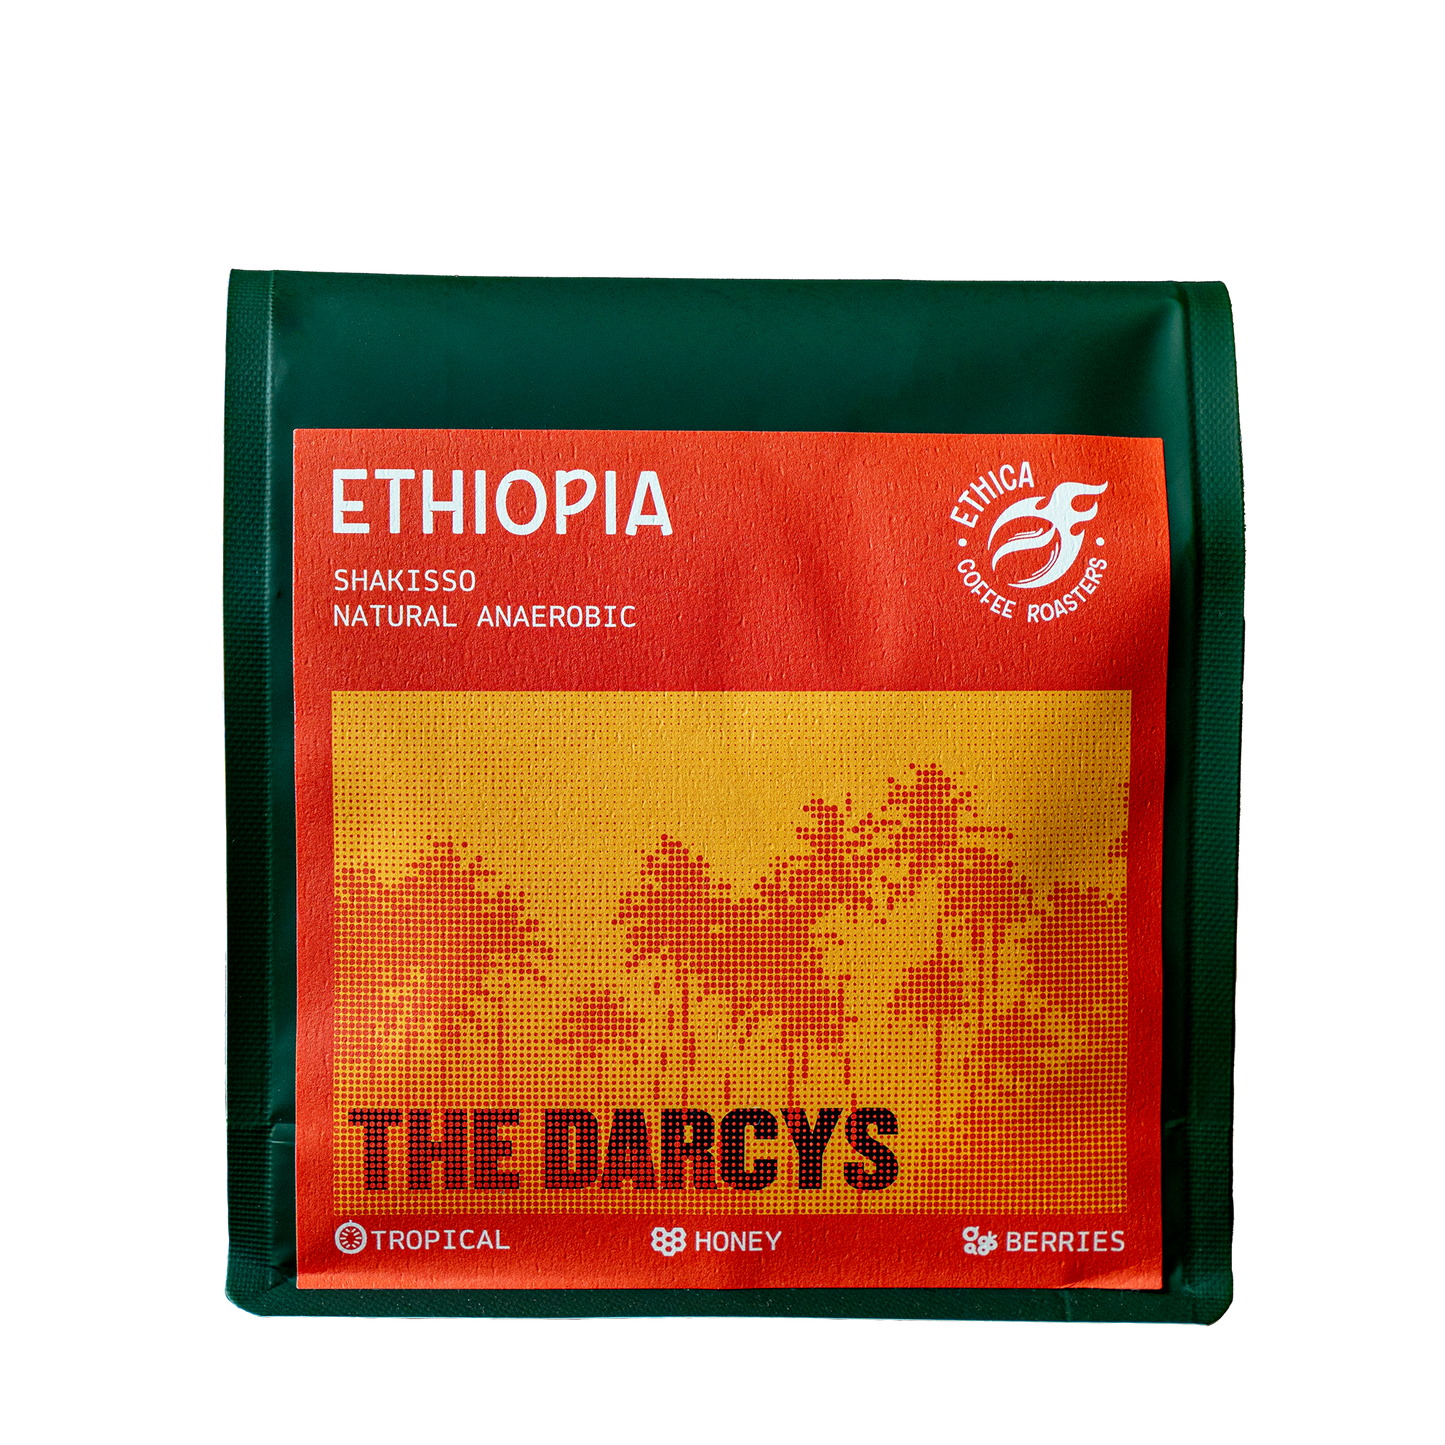 The Darcys x Ethica Coffee Roasters Ethiopia Shakisso